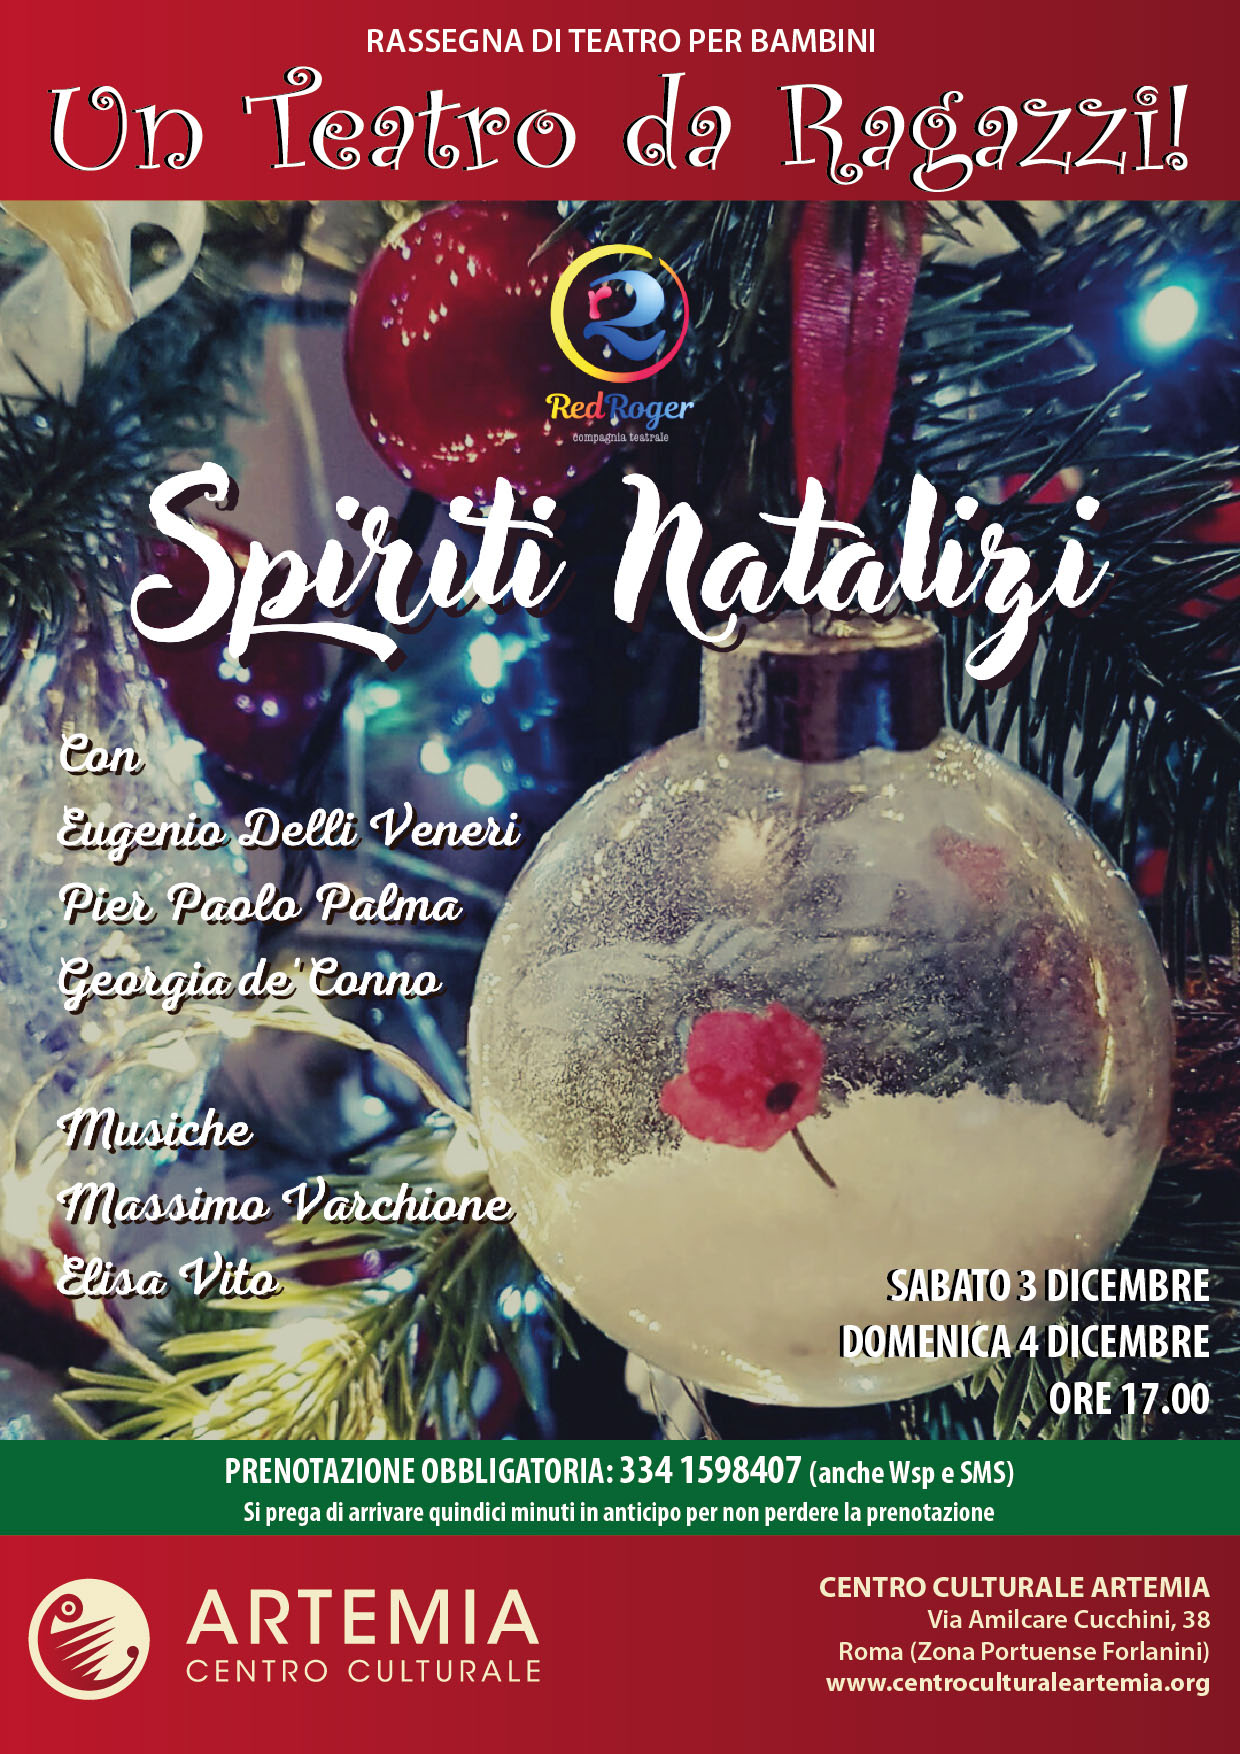 Spiriti Natalizi – Rassegna “Un Teatro da Ragazzi”